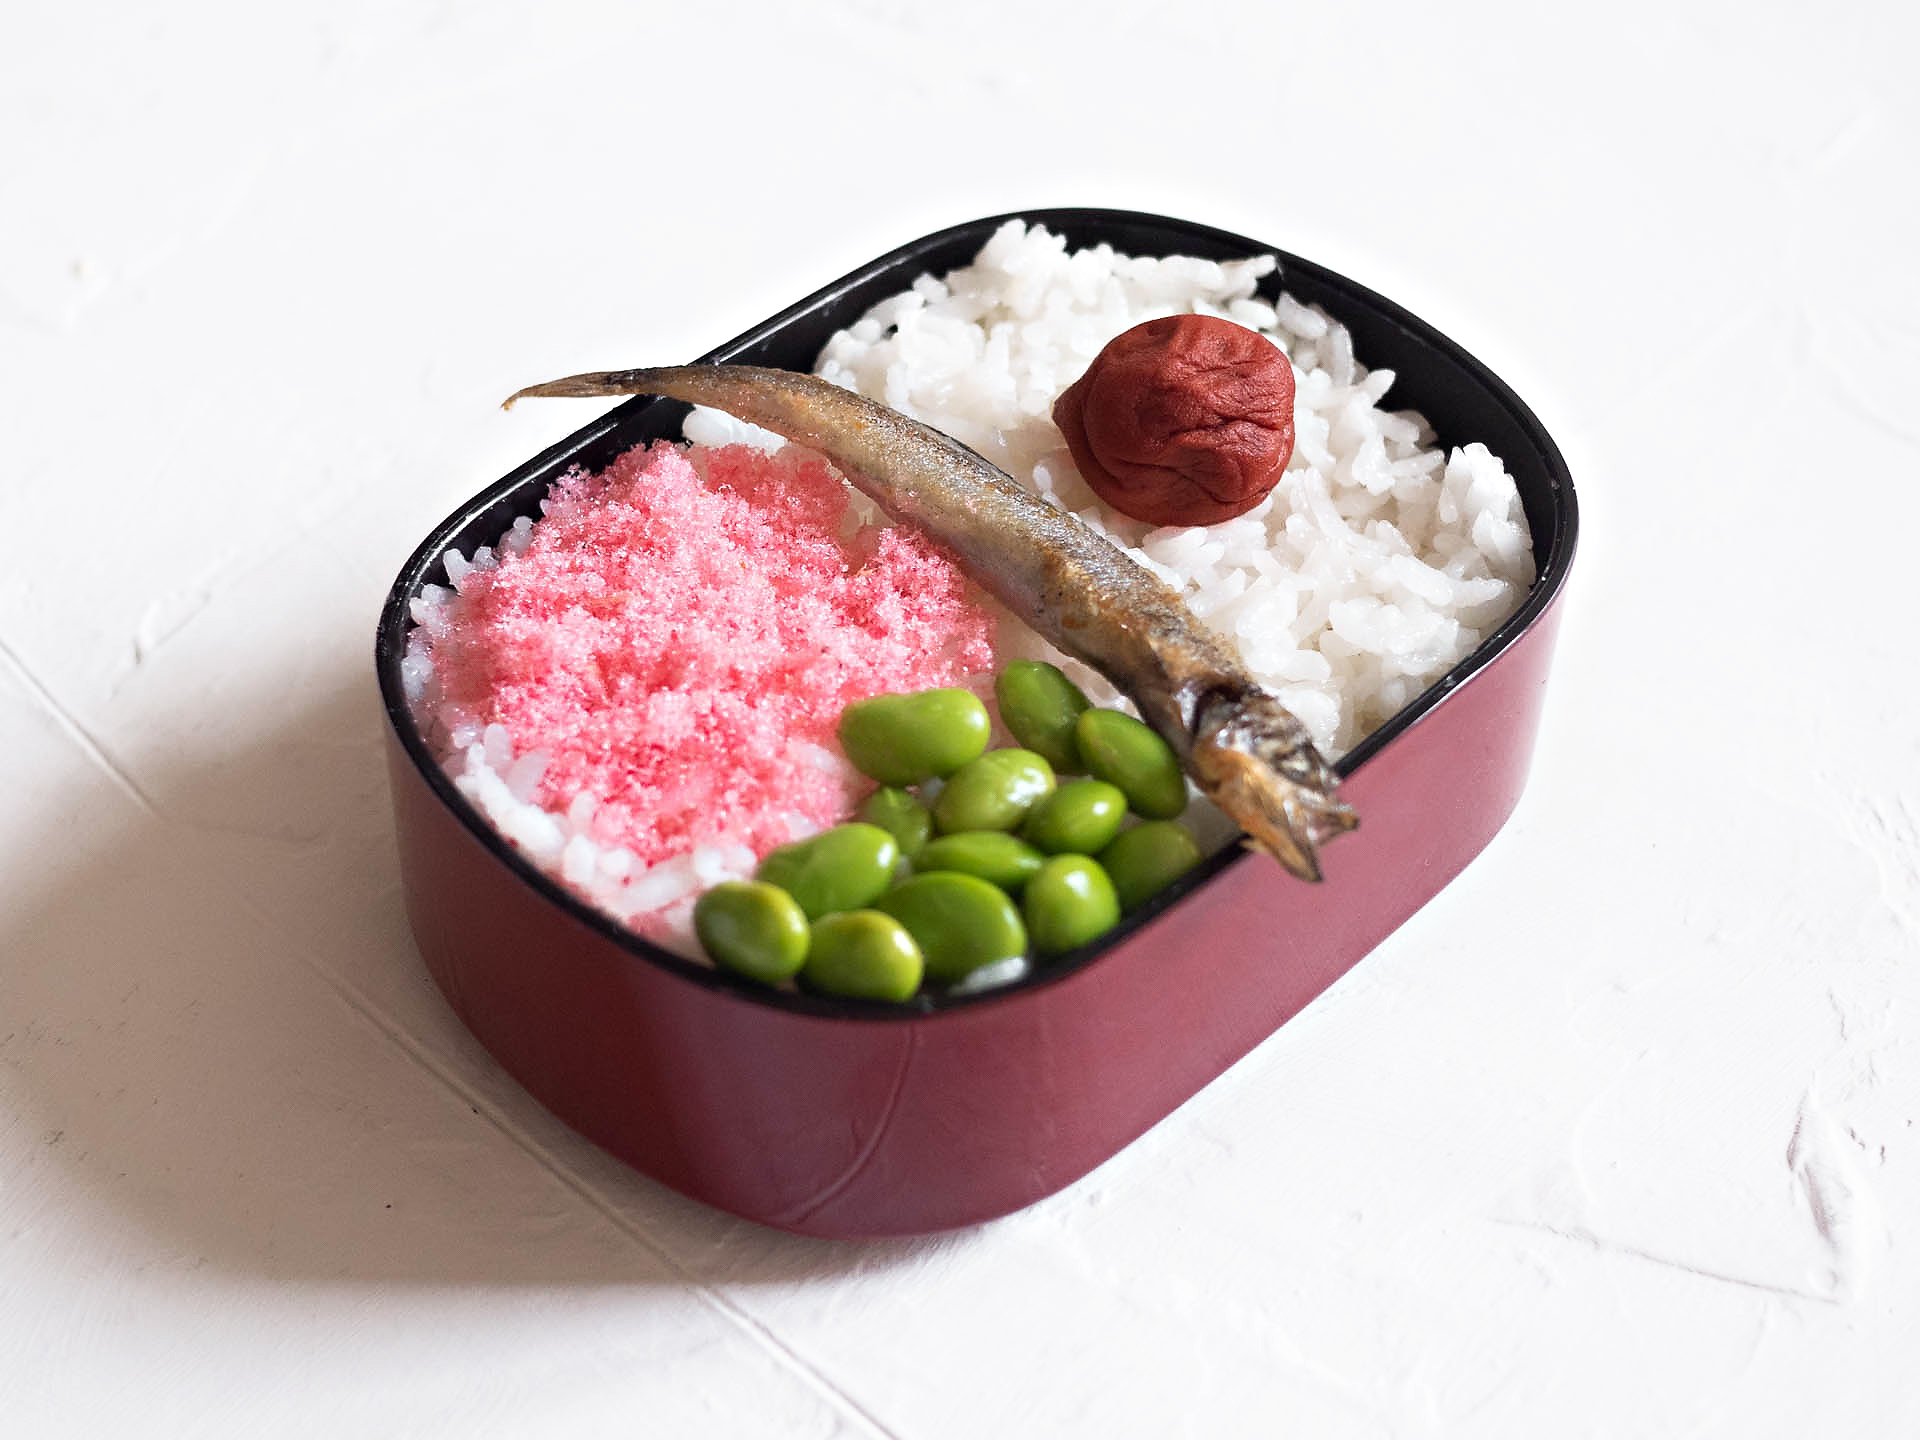 My Neighbor Totoro Bento Lunch Box